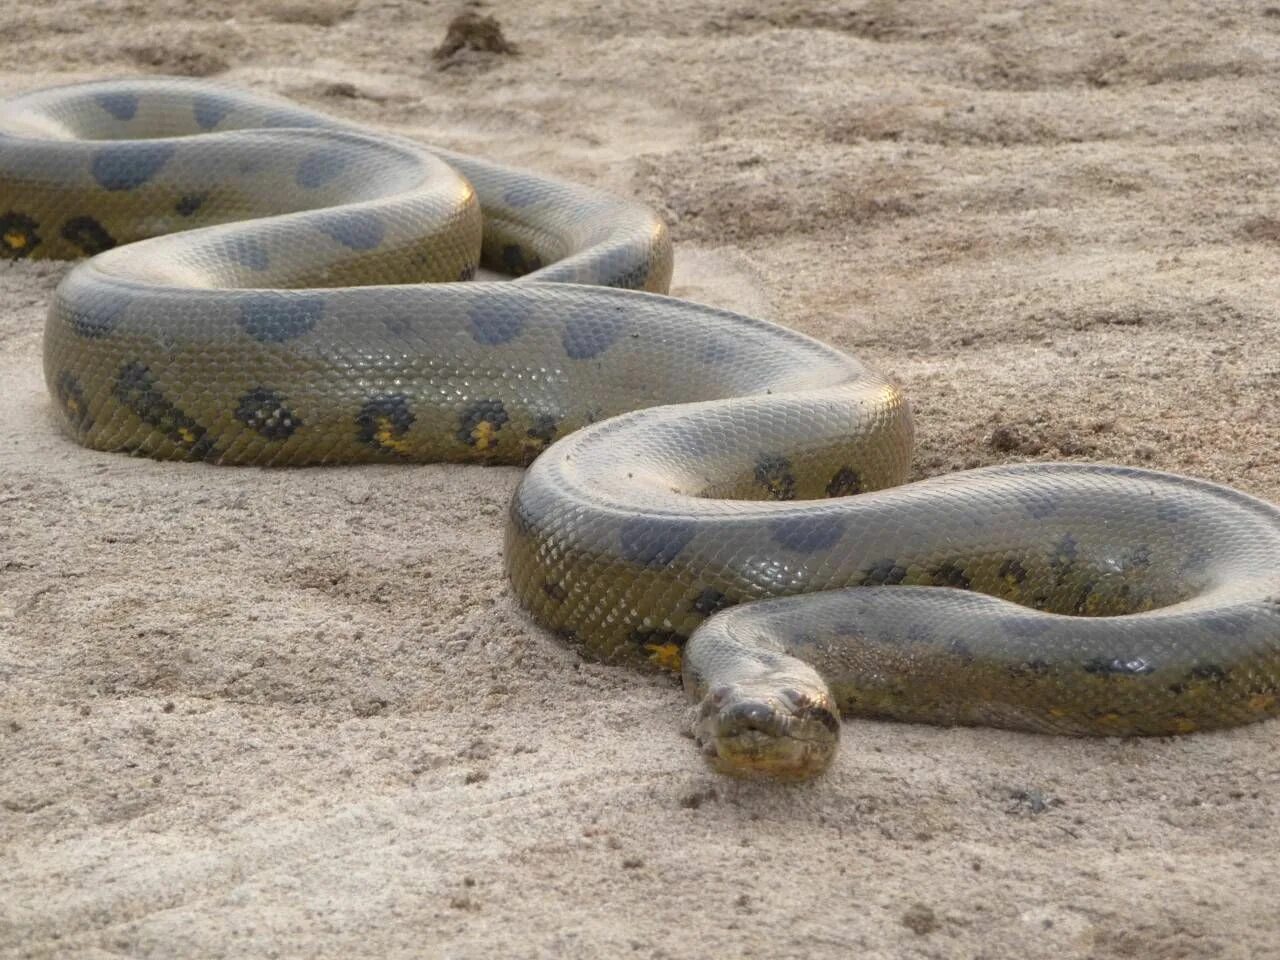 Snakes are longer. Анаконда змея. Змея Анаконда самая большая змея в мире. Водяной удав Анаконда.